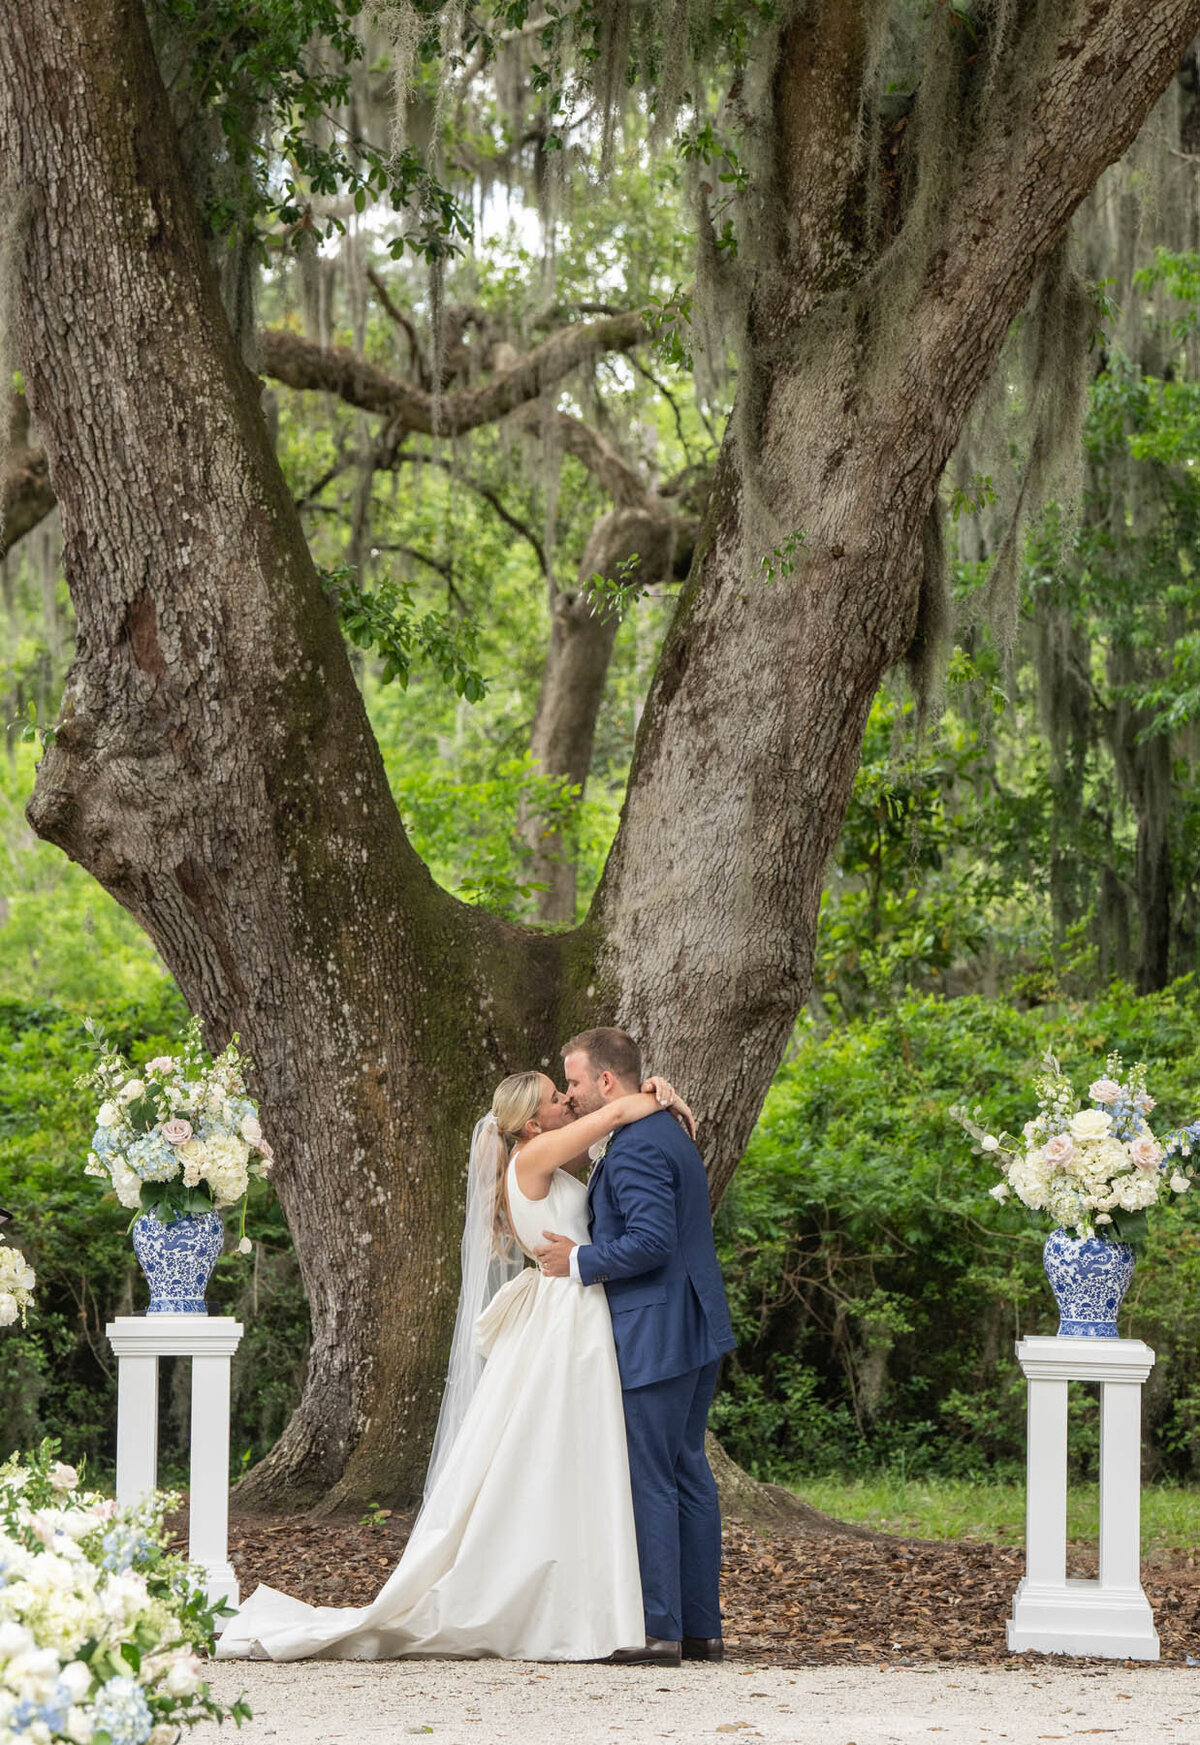 Savannah-Georgia-wedding-planner-destinctive-events-kelli boyd photography0069